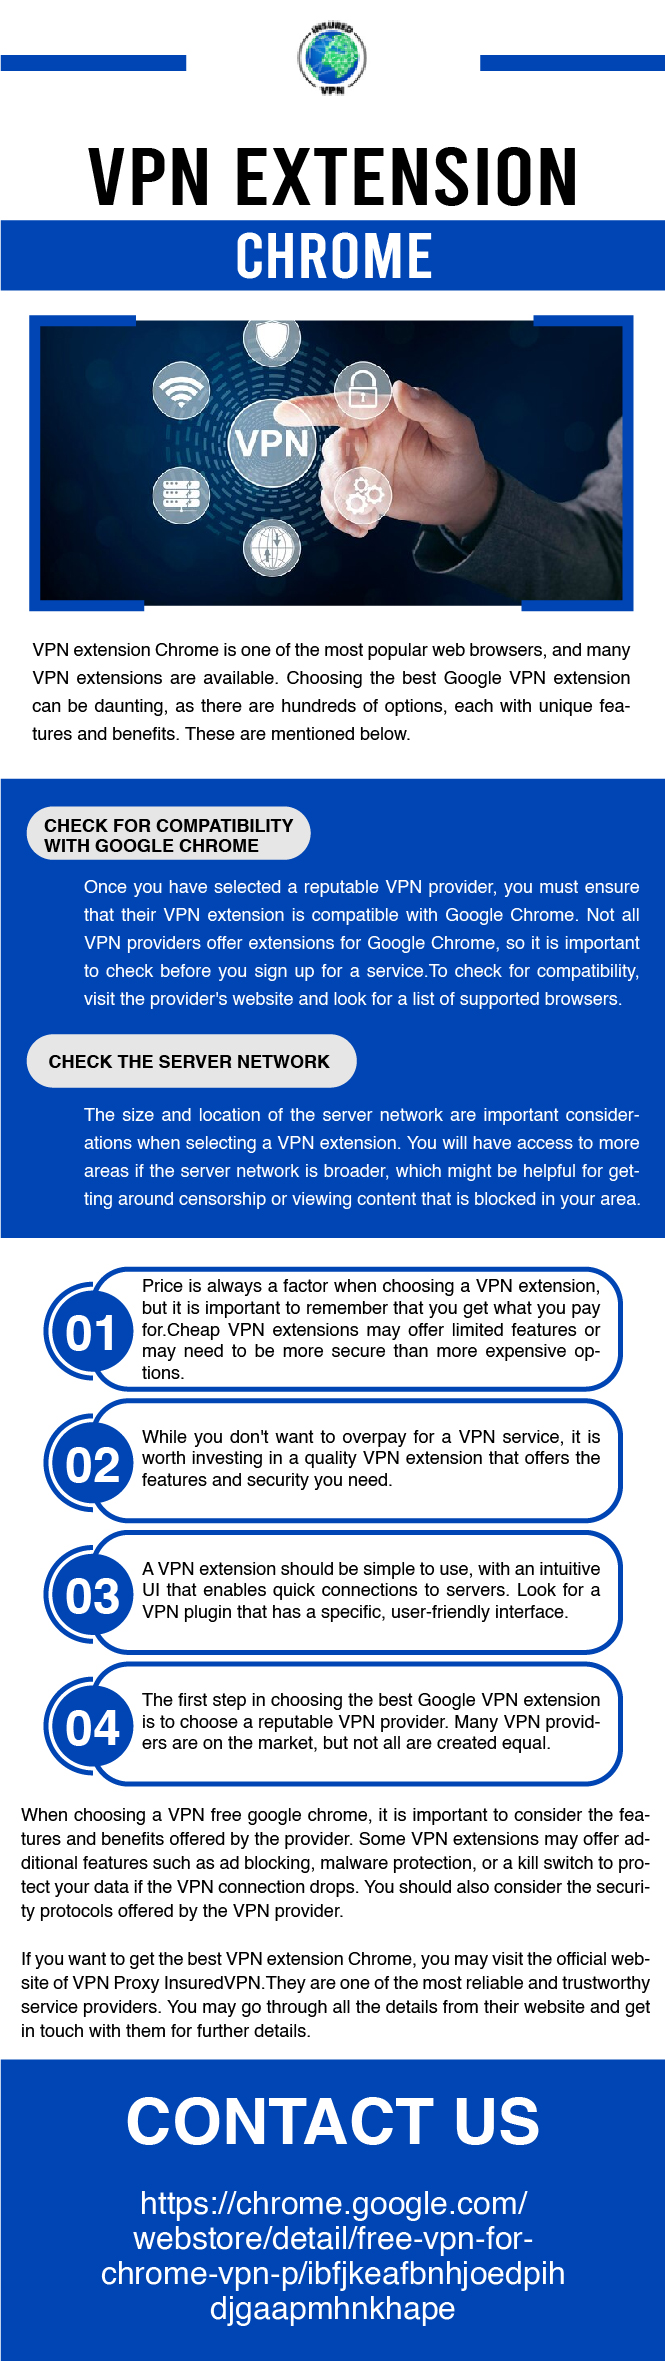 Find The Best VPN Extension Chrome for You – Install VPN Proxy InsuredVPN